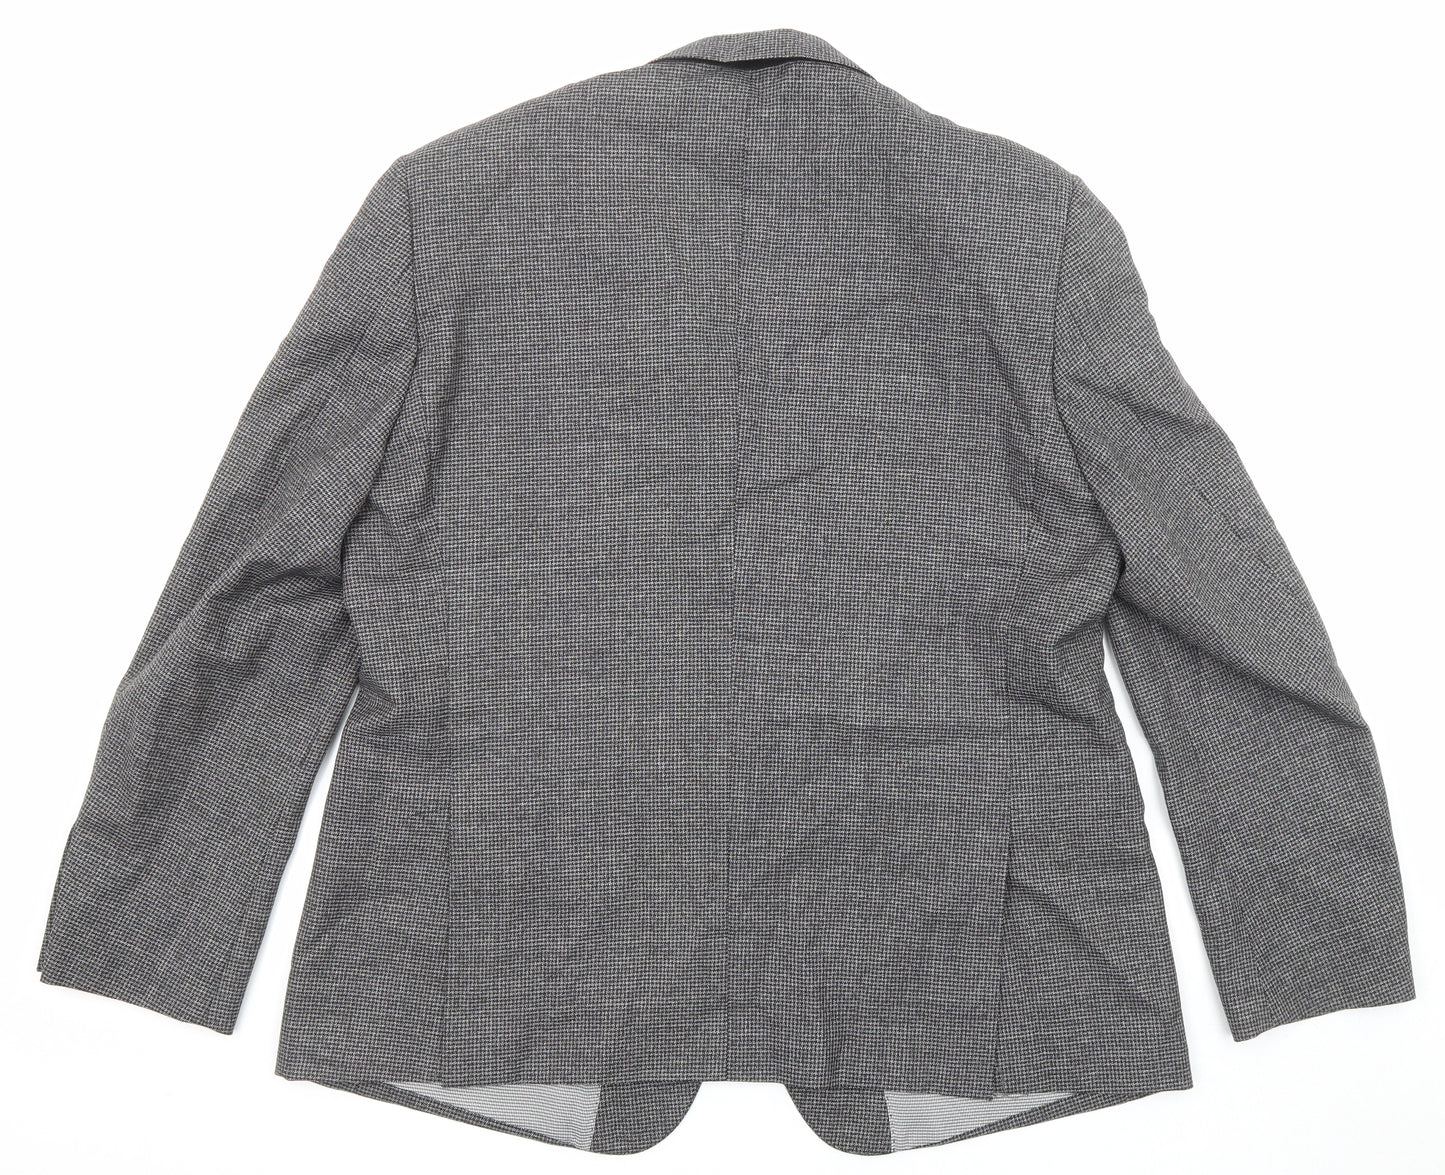 Skopes Mens Grey Geometric Wool Jacket Suit Jacket Size 46 Regular